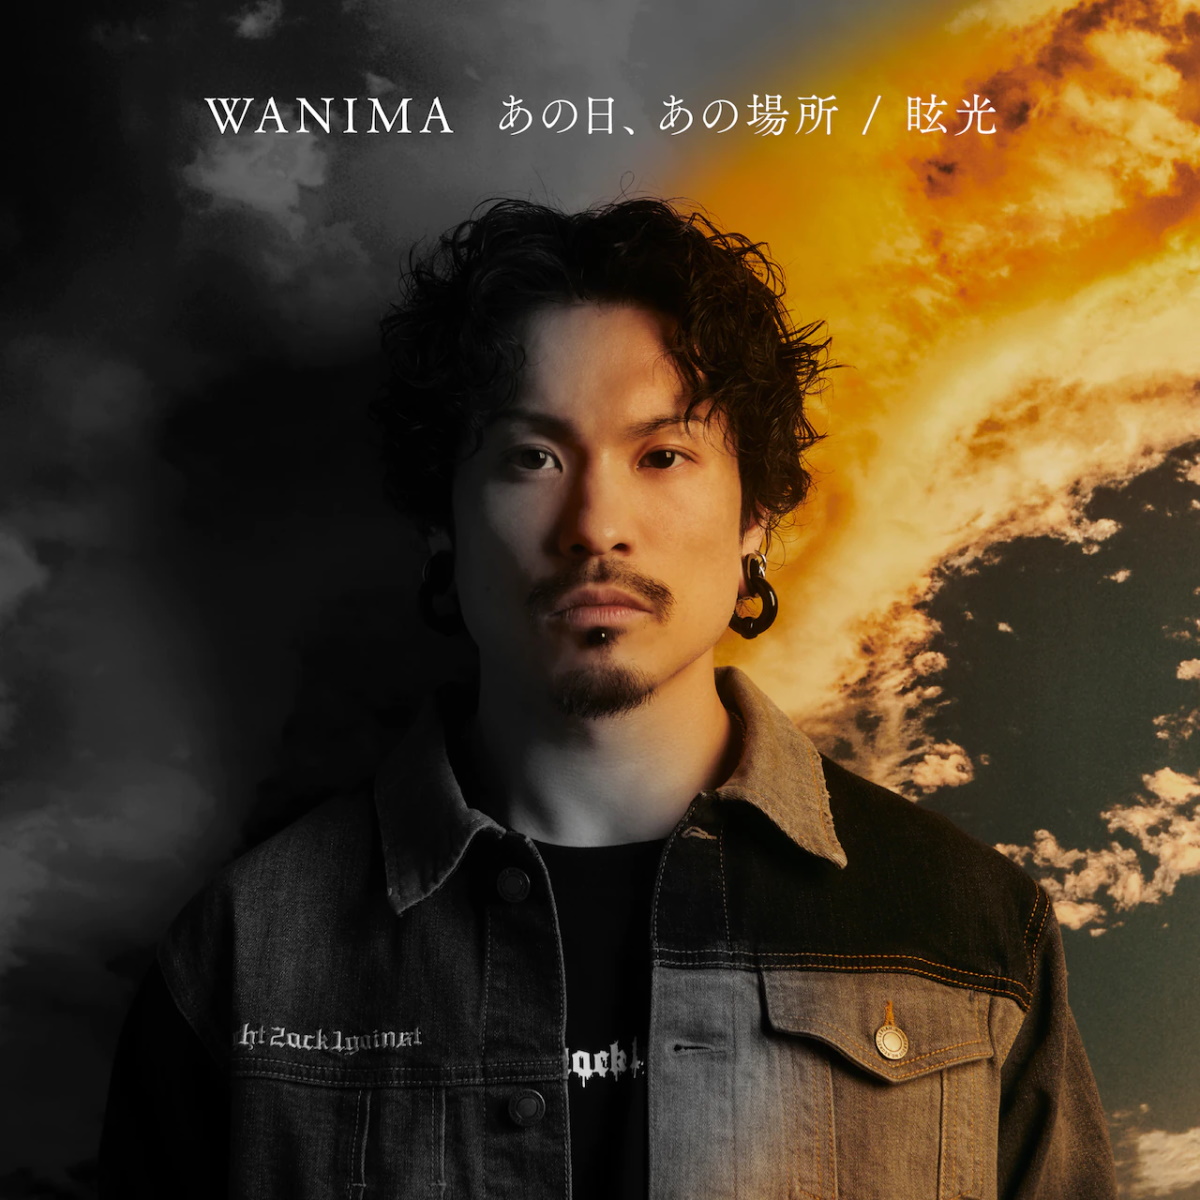 Cover art for『WANIMA - Genkou』from the release『Ano Hi, Ano Basho / Genkou』